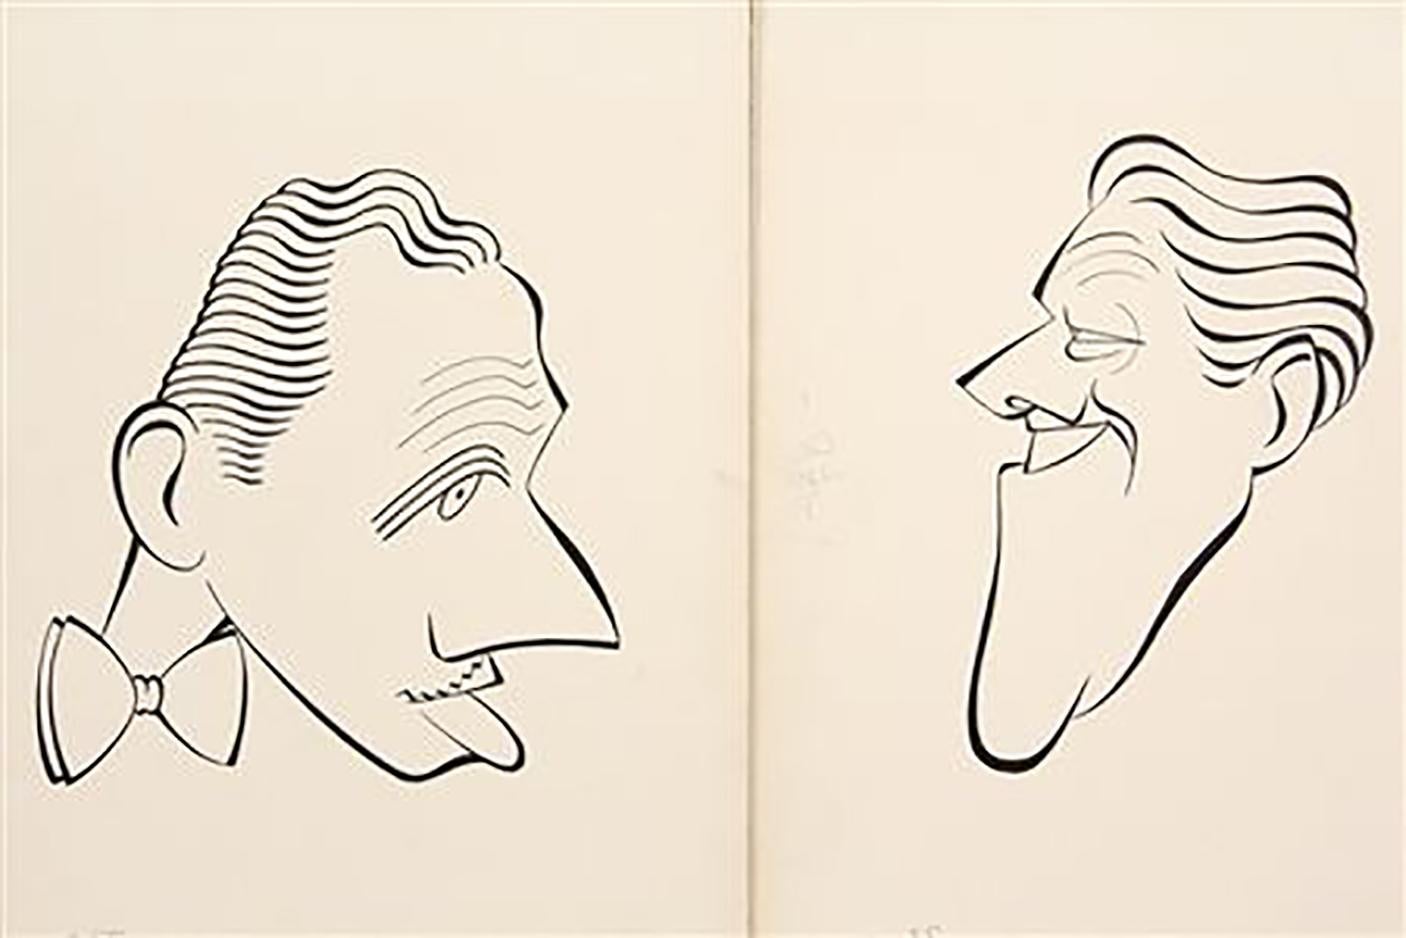 George Wachsteter Figurative Art - Melvyn Douglas & Michael O'Shea